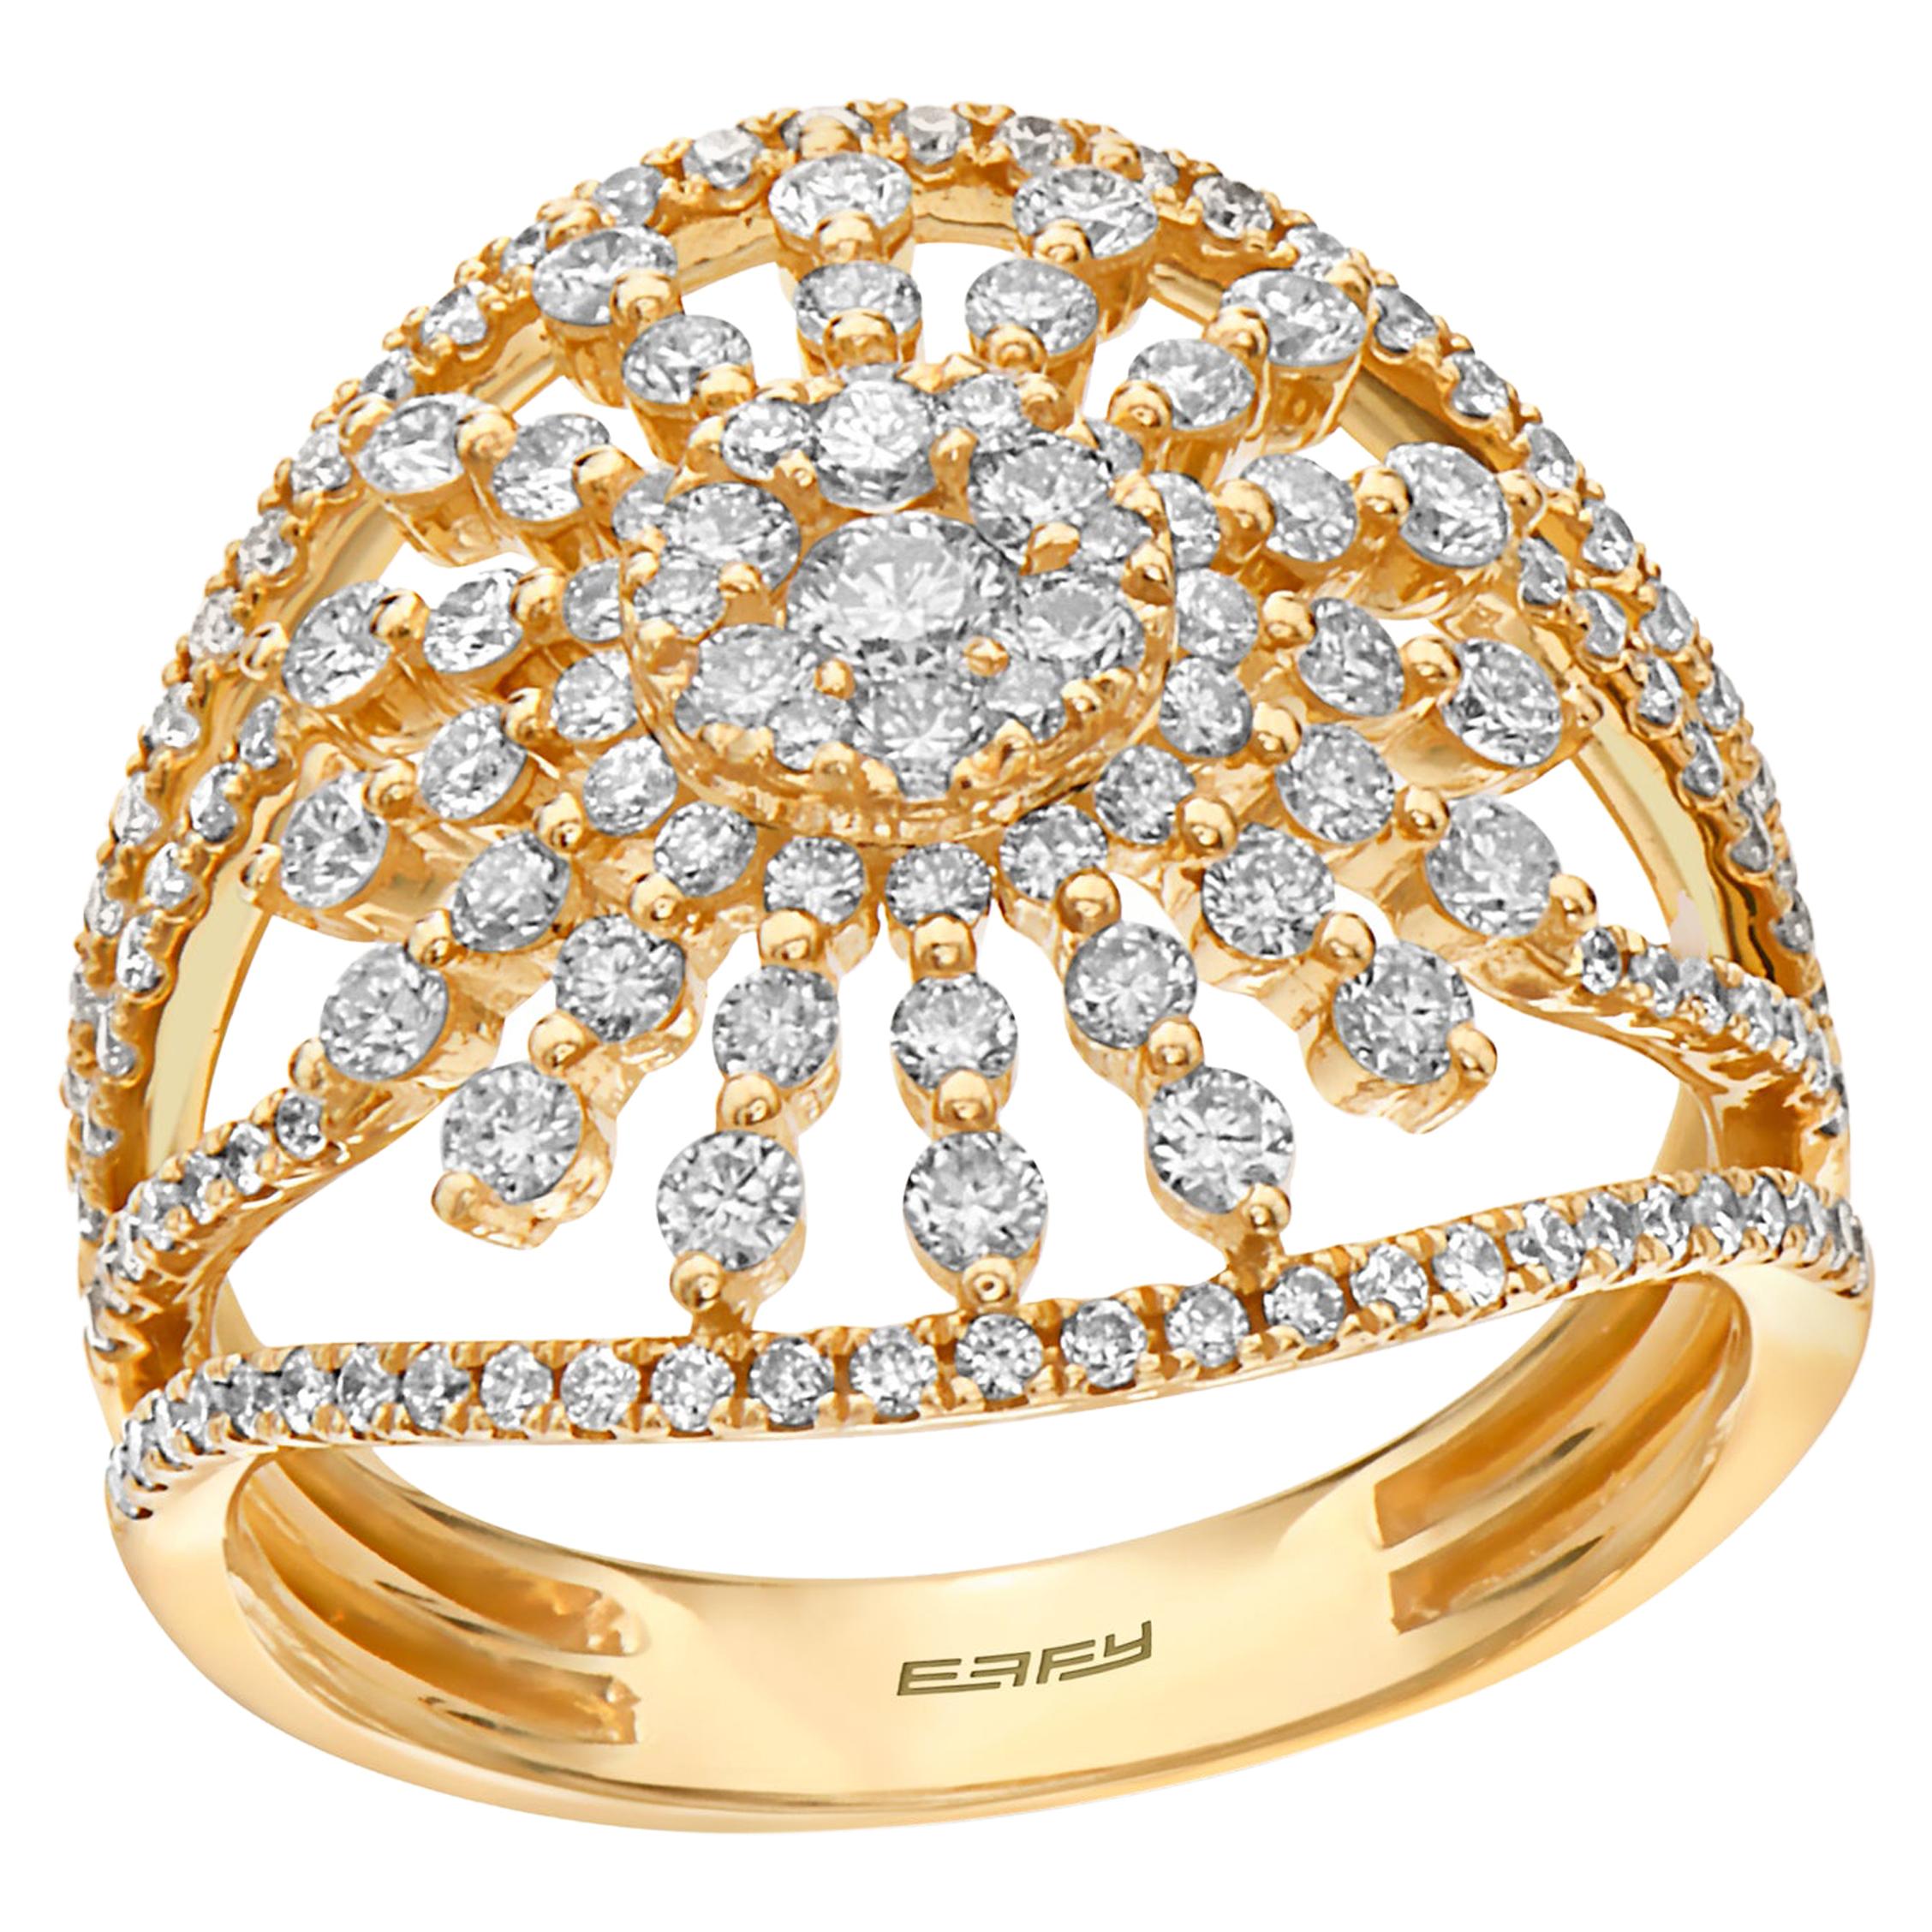 Effy 14 Karat Yellow Gold and Diamond Ring For Sale